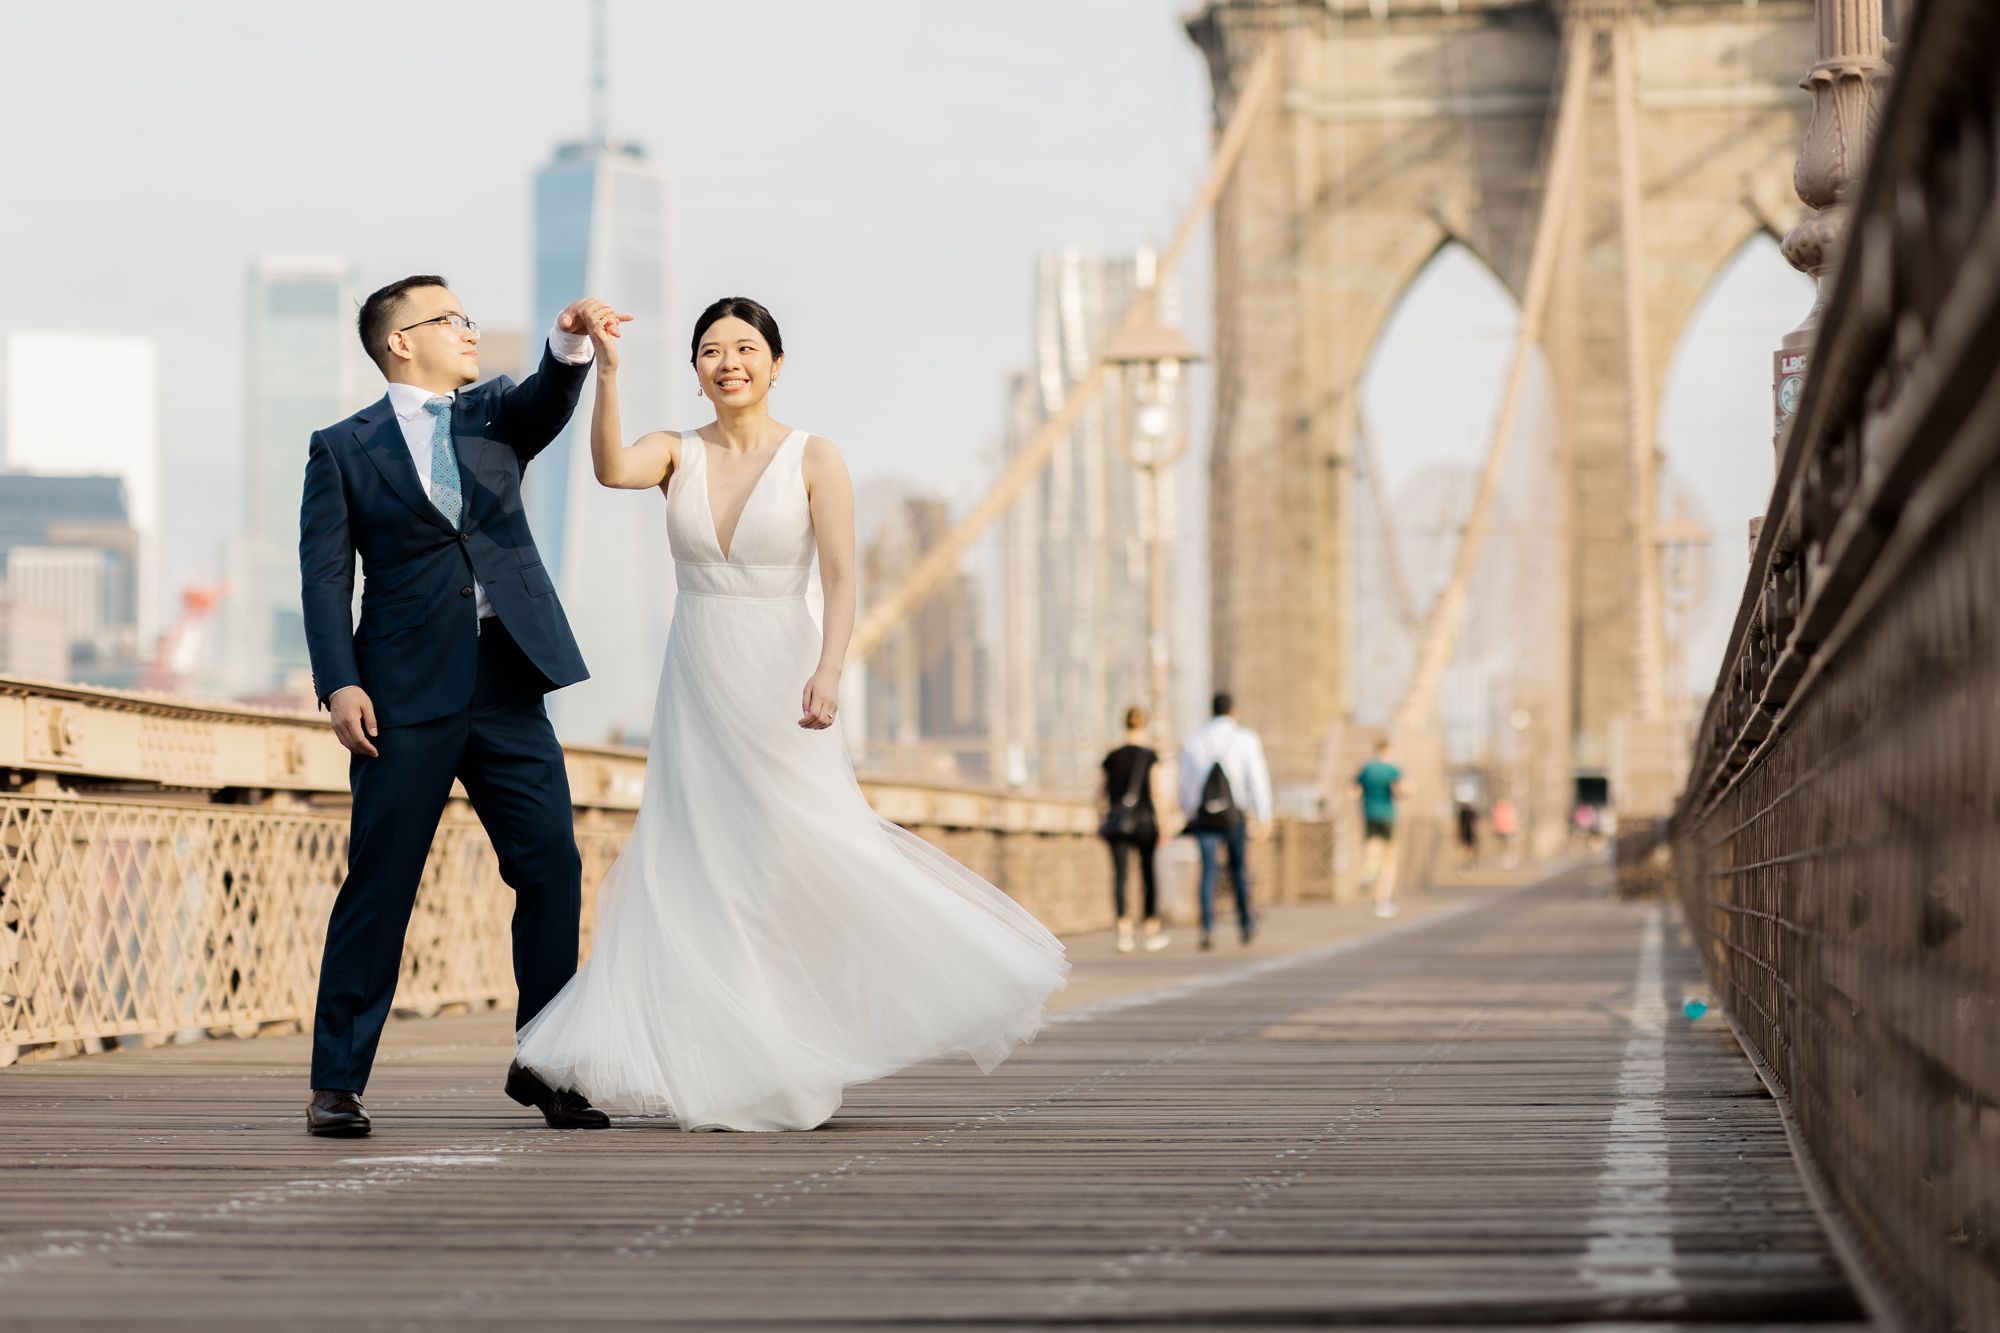 Radiant New York City Wedding Photography